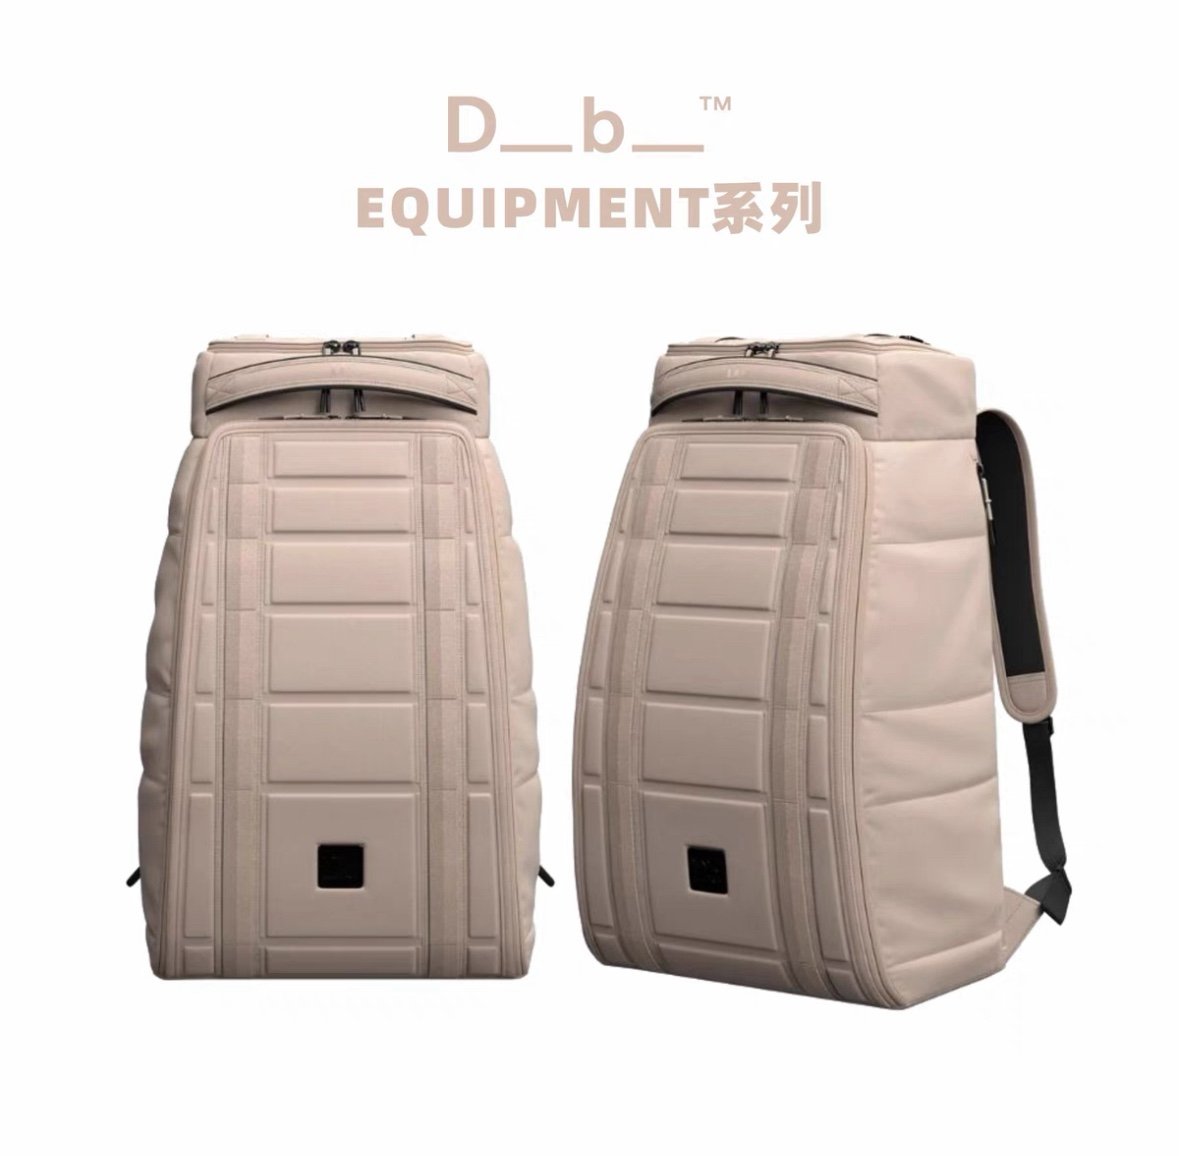 Db backpack 20L PxgkOolk8